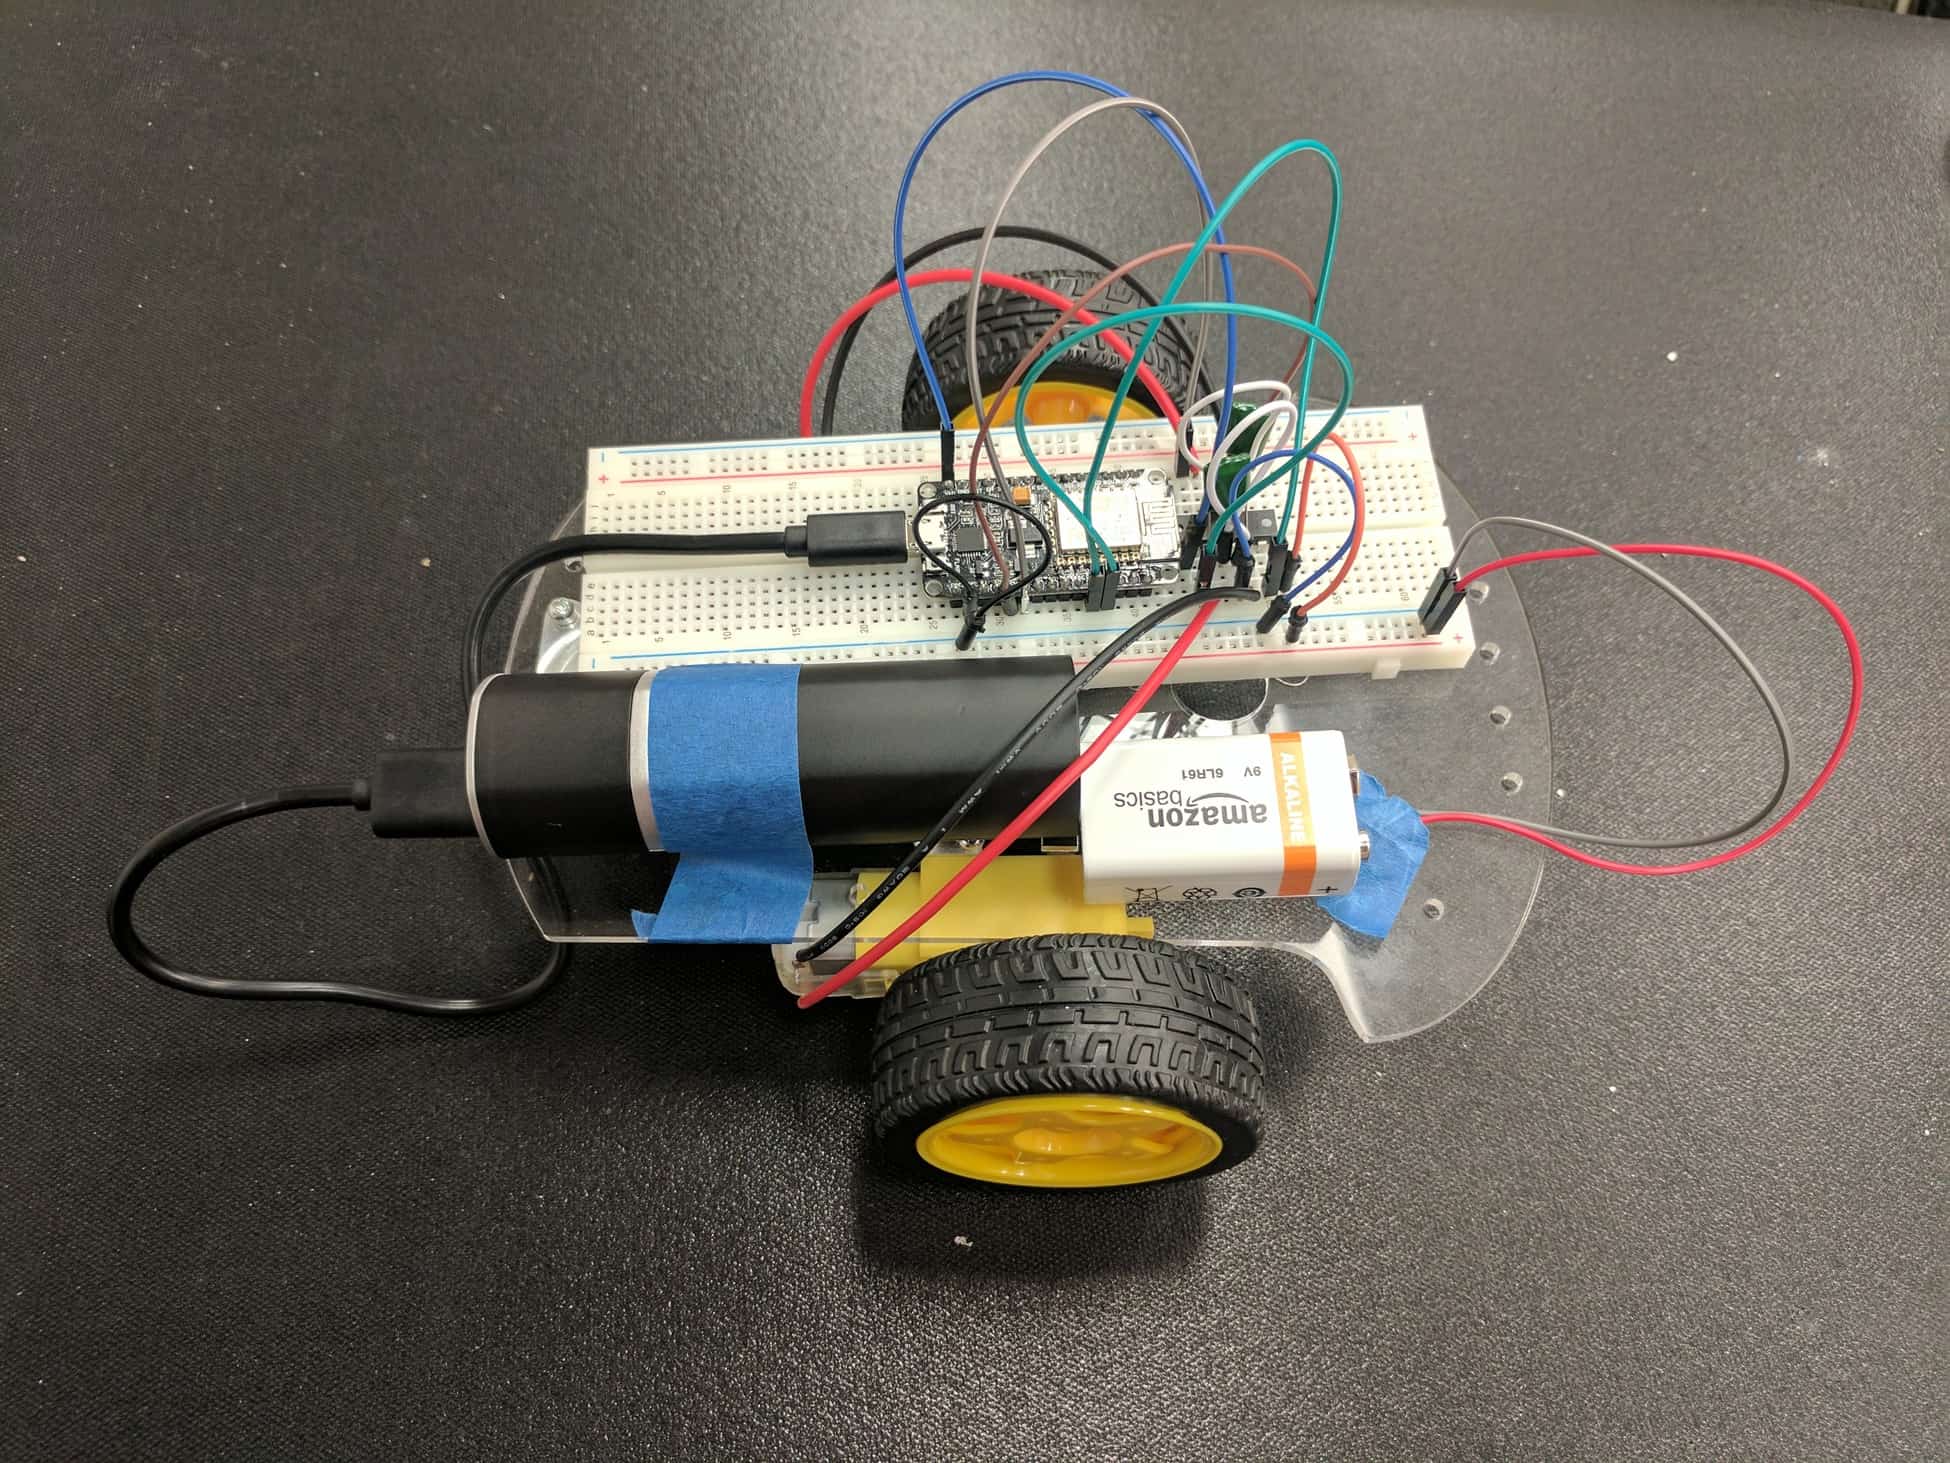 Robot made using Arduino at STEM camp